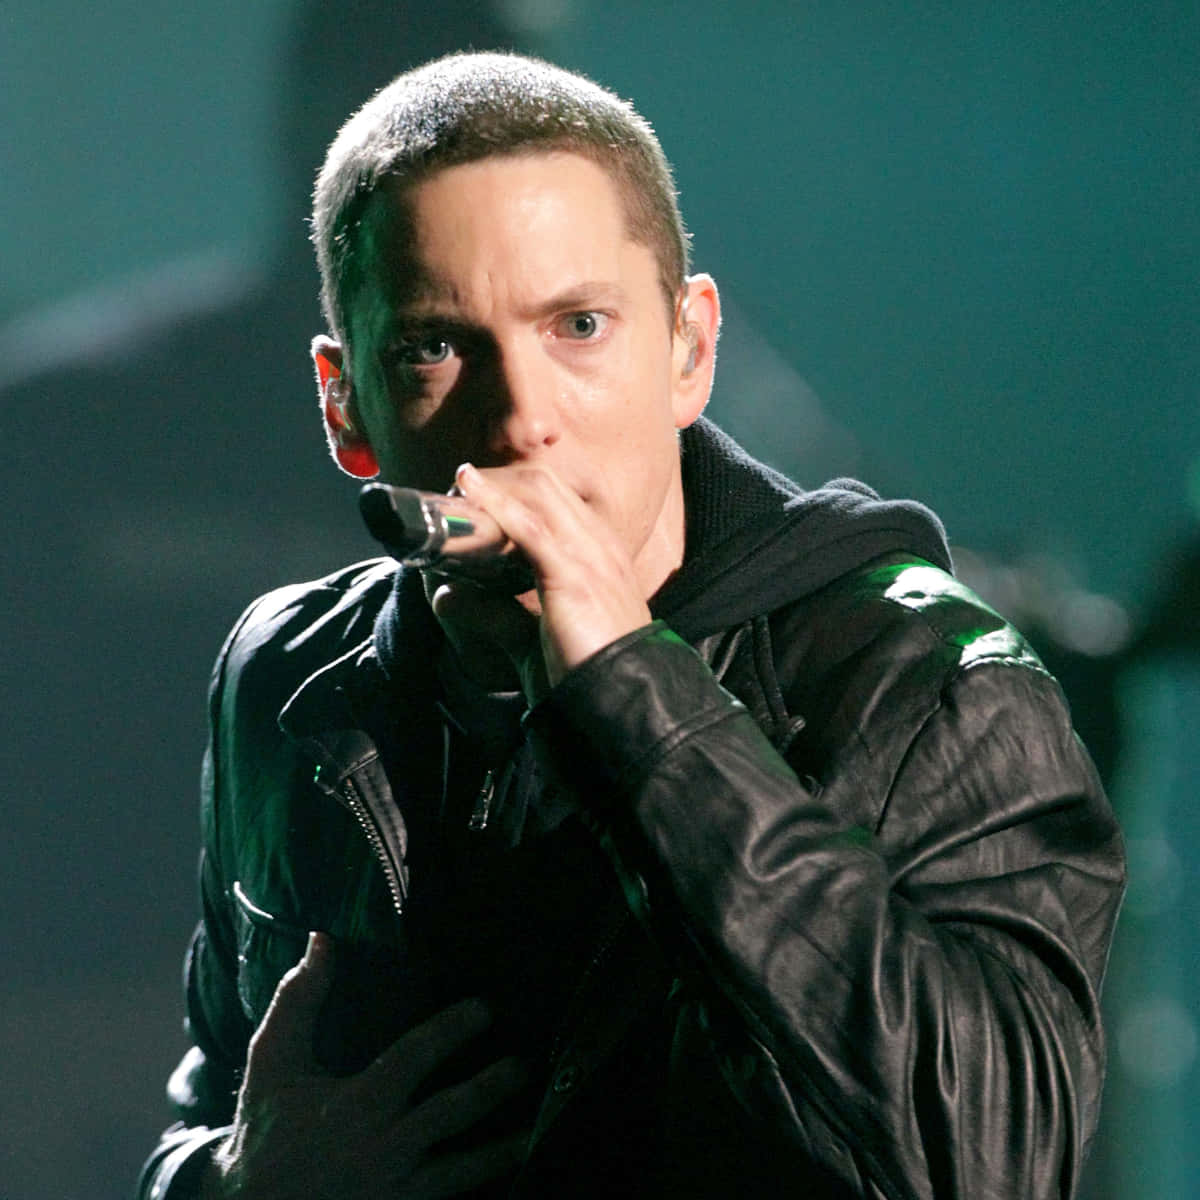 Eminem posing confidently in a black hoodie